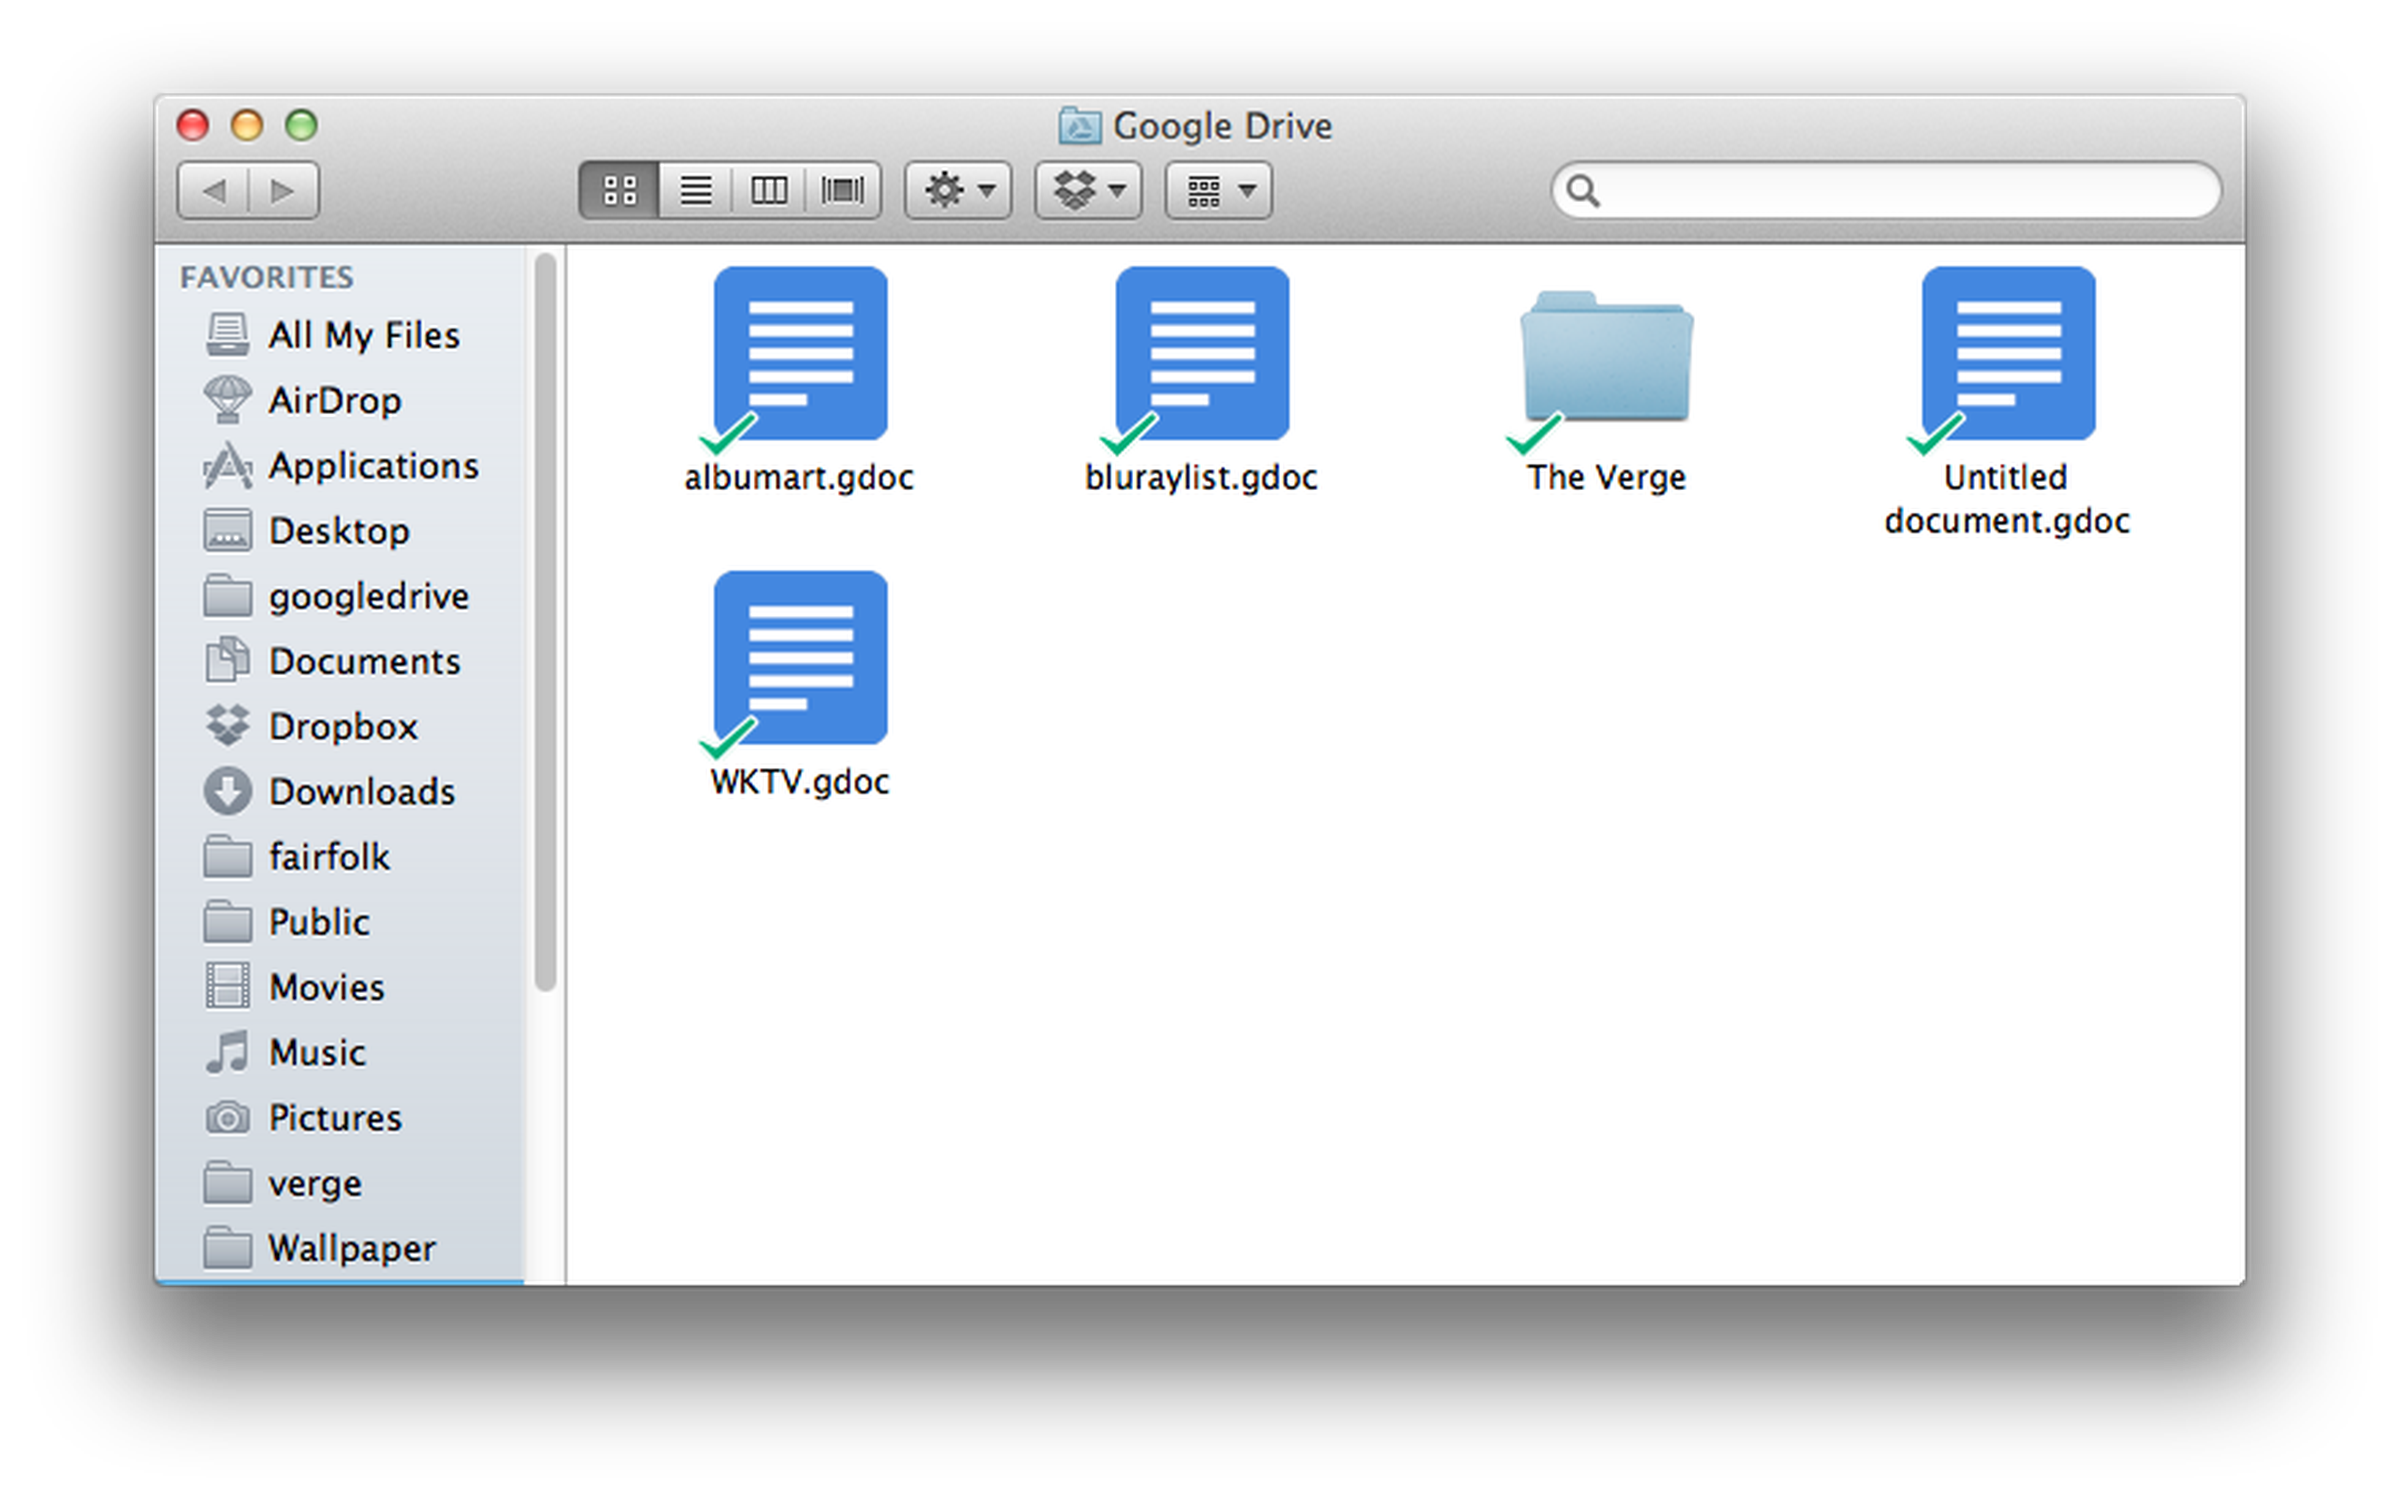 Google Drive web, Mac OS X, and Windows screenshots